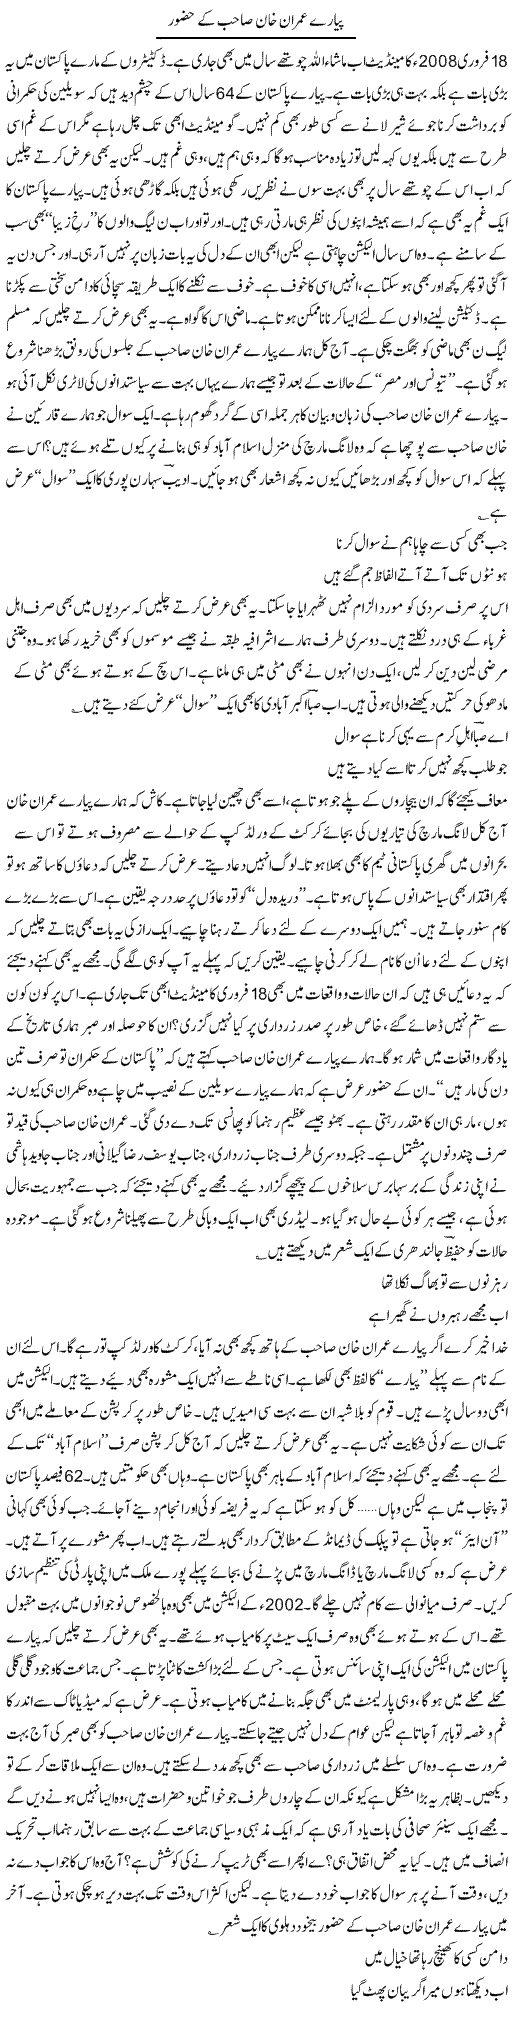 Dear Imran Khan Express Column Ijaz Hafeez 22 February 2011